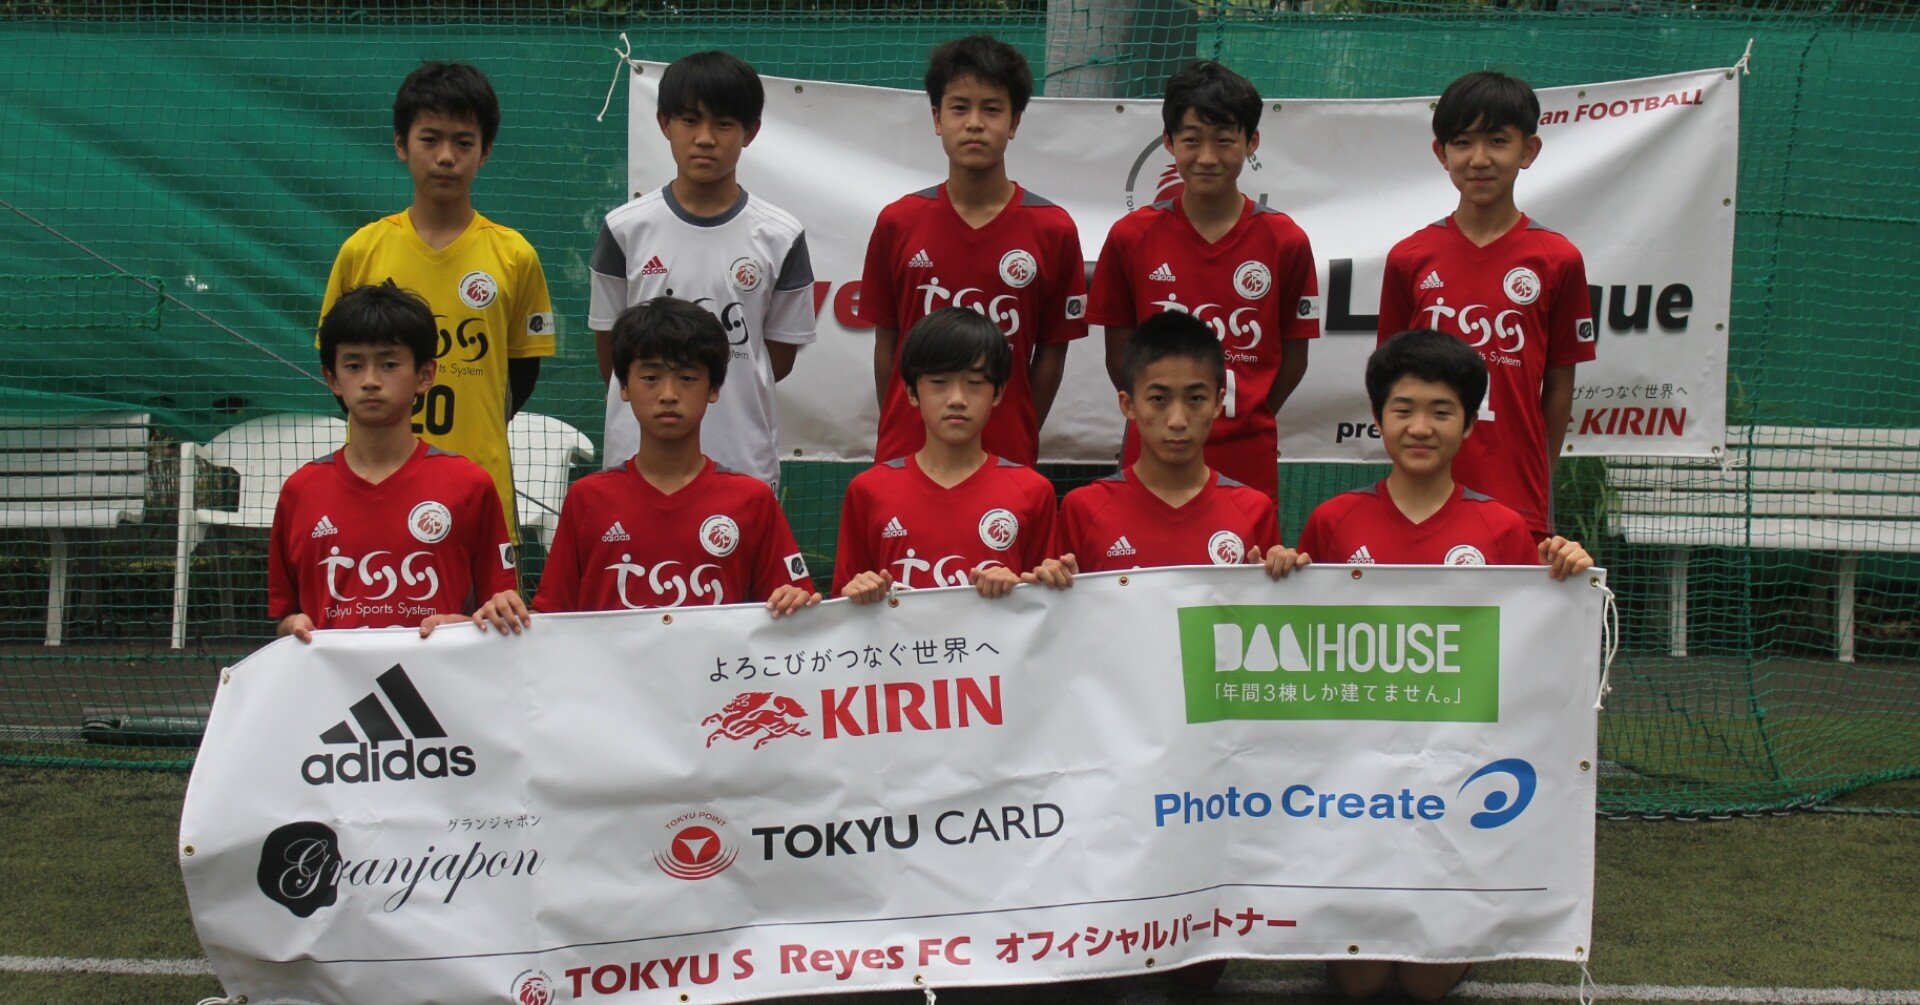 Reyes Futsal League U14 Presented By Kirin Vs府中アスレティックfc 6 日 東急sレイエスfc Note